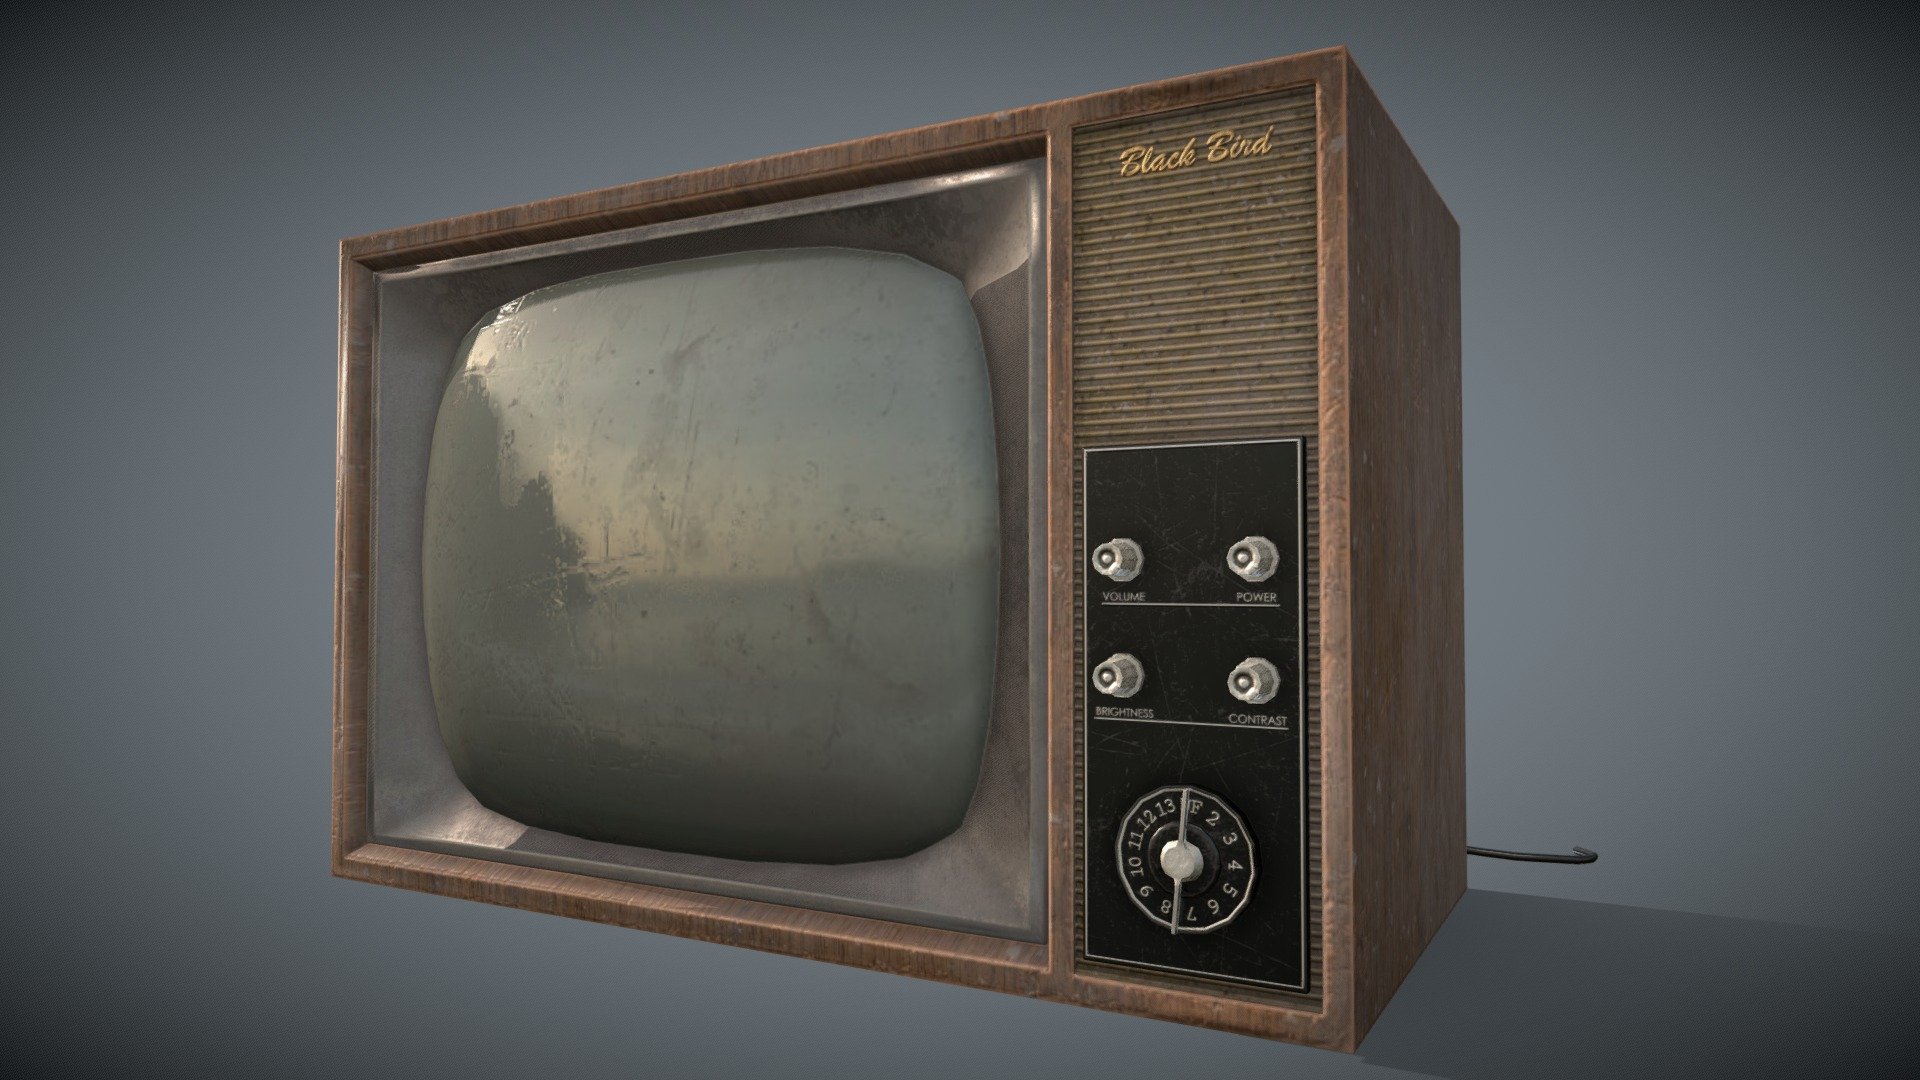 Vintage Tv set I made for a project scene inside unreal engine. game-ready asset ideal for horror game, derelict place 3d model